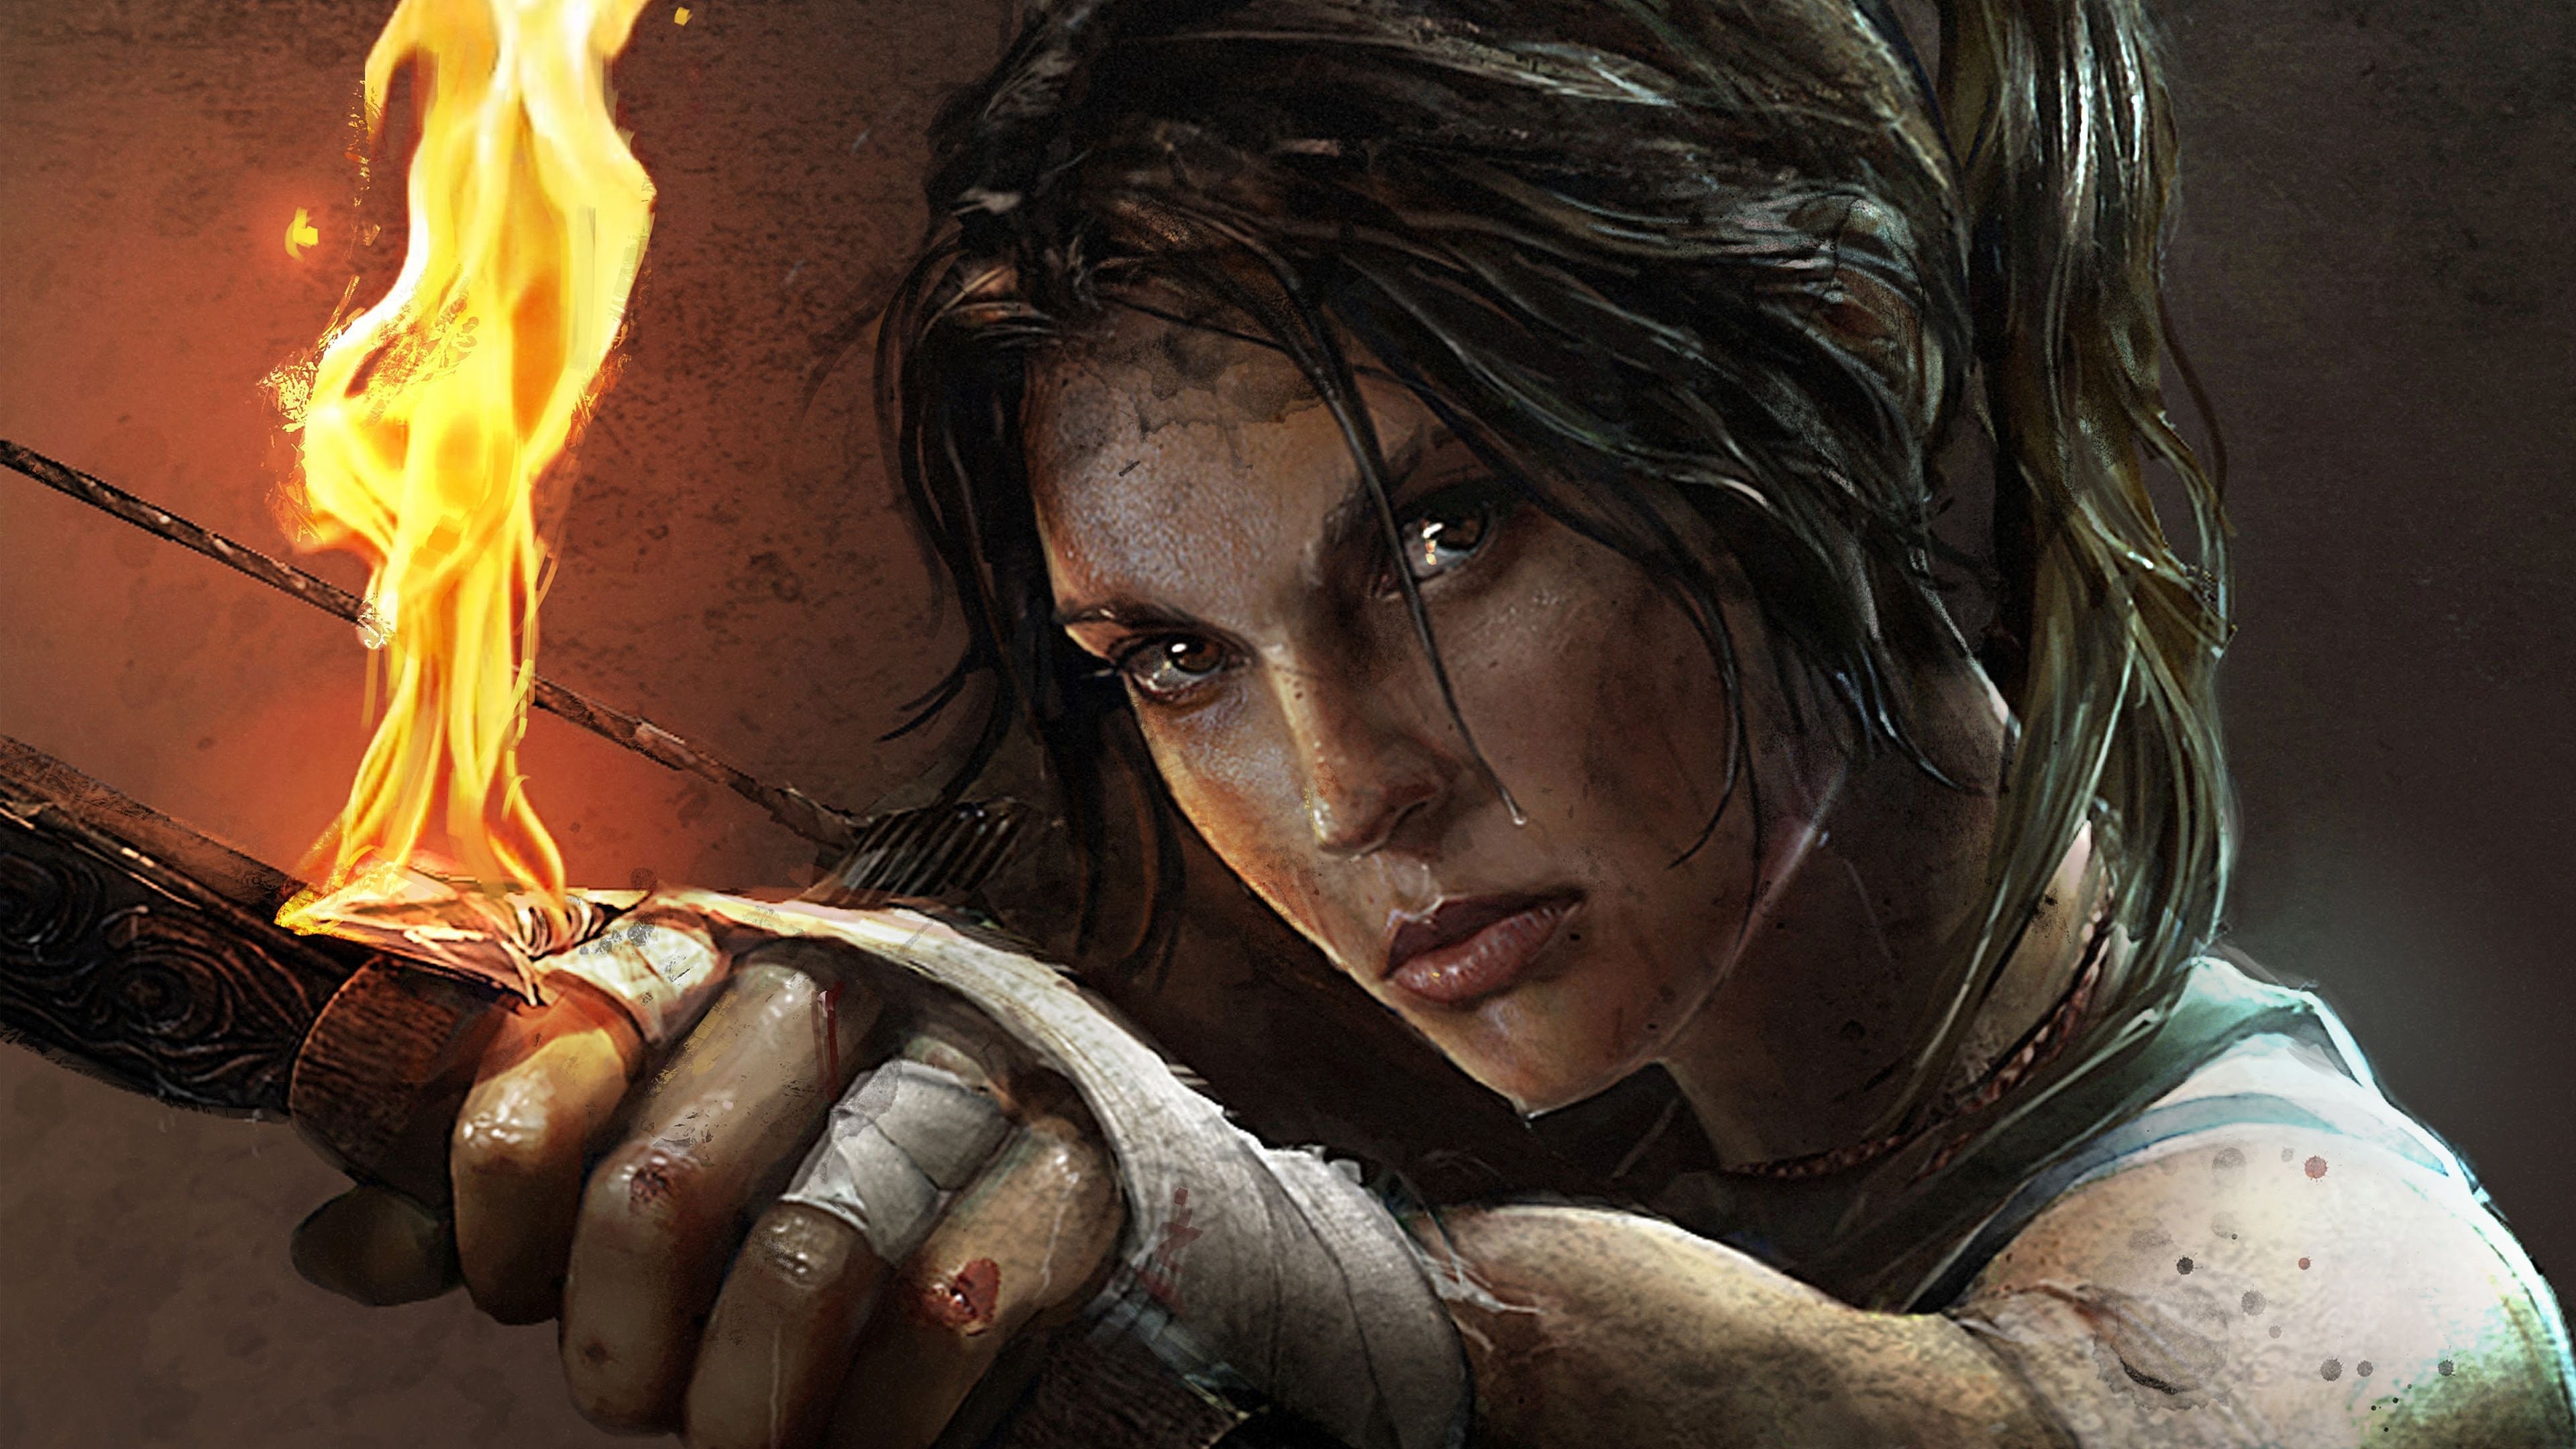 Lara Croft Tomb Raider wallpapers, Iconic movie character, Gaming inspiration, 3840x2160 4K Desktop